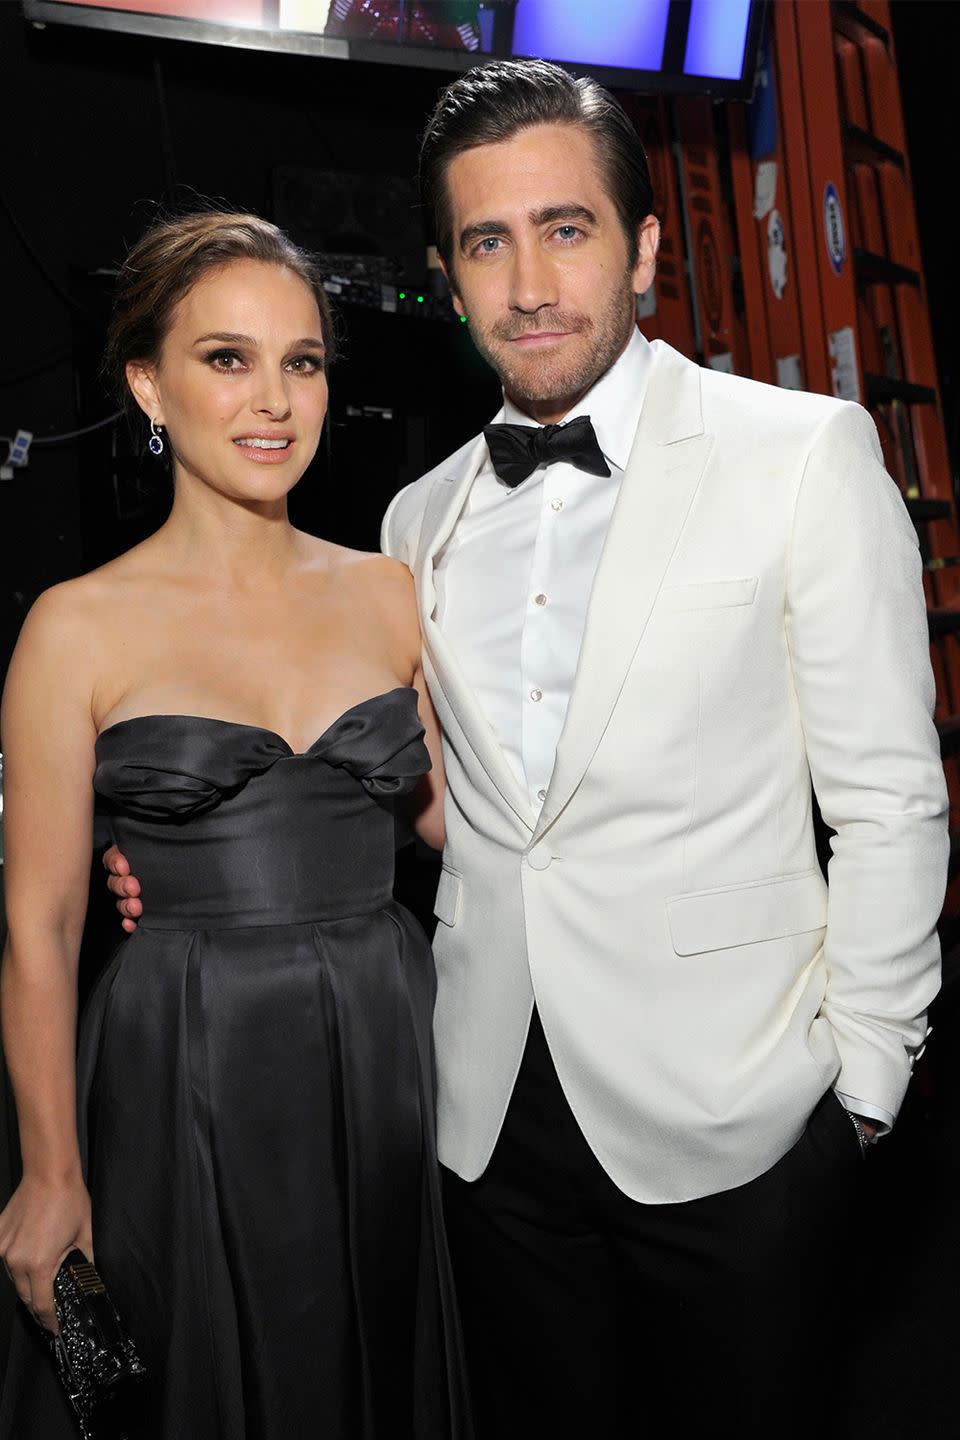 Natalie Portman and Jake Gyllenhaal